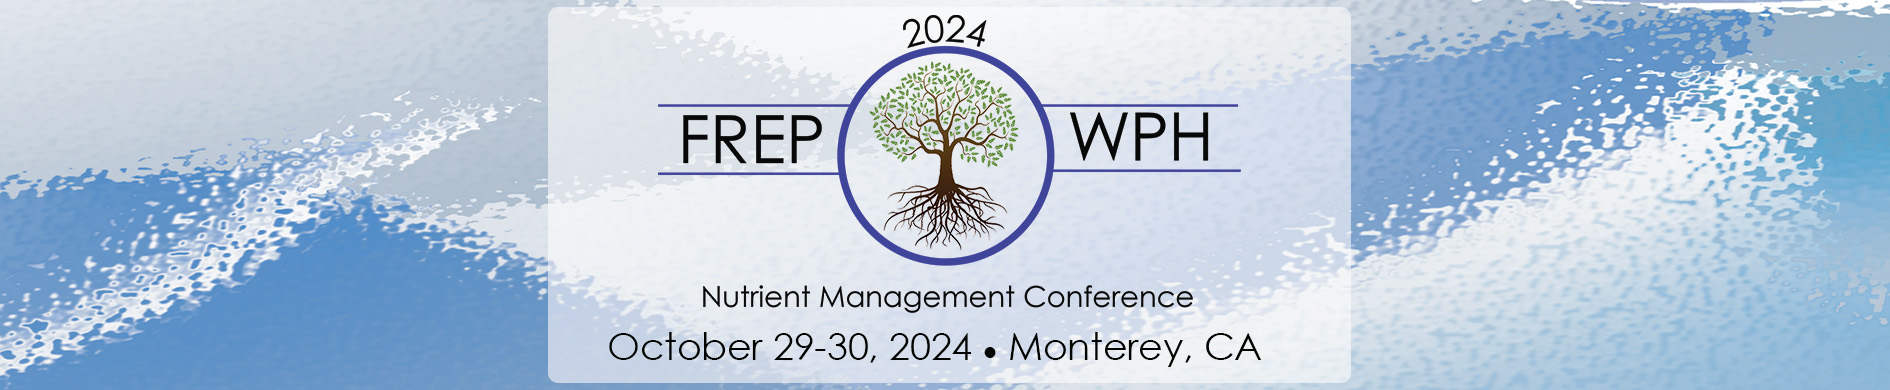 FREP/WPH Nutrient Management Conference